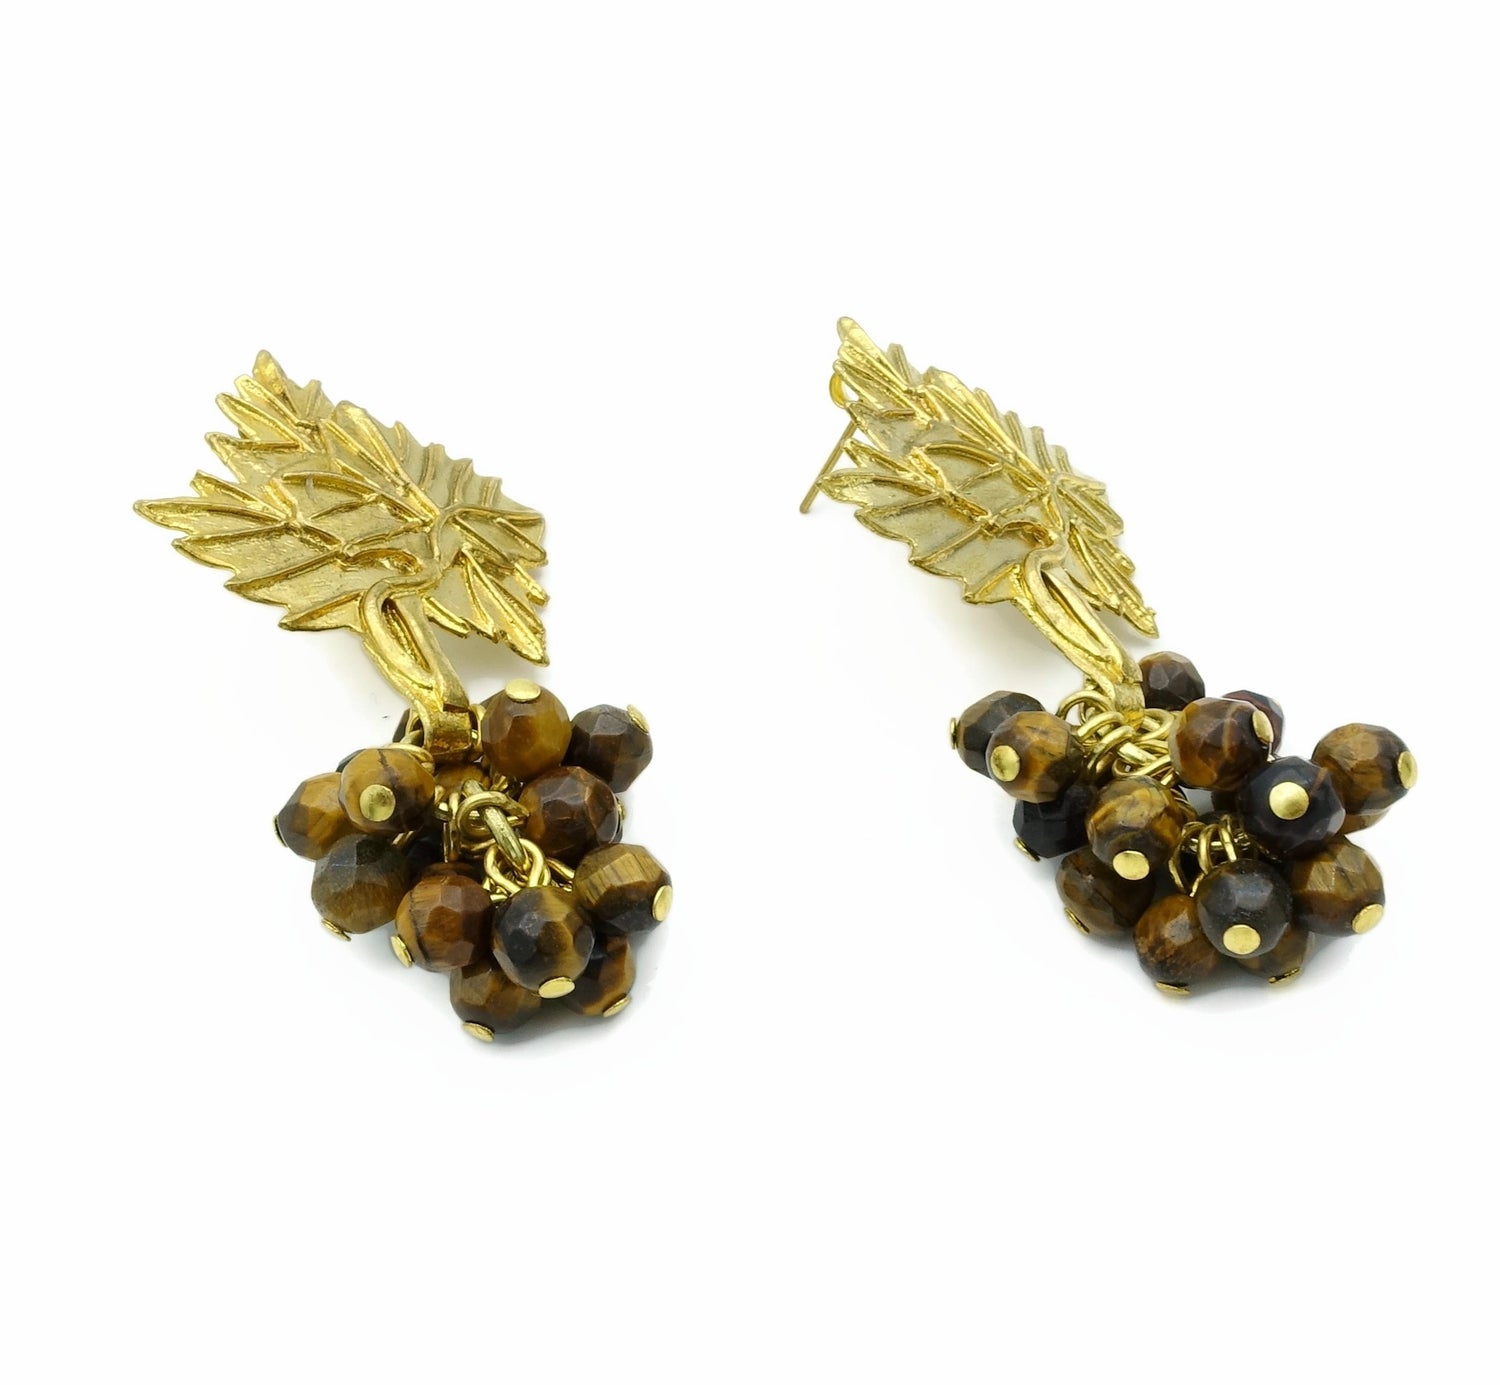 Aylas Tiger eye earrings - 21ct Gold plated semi precious gemstone - Handmade